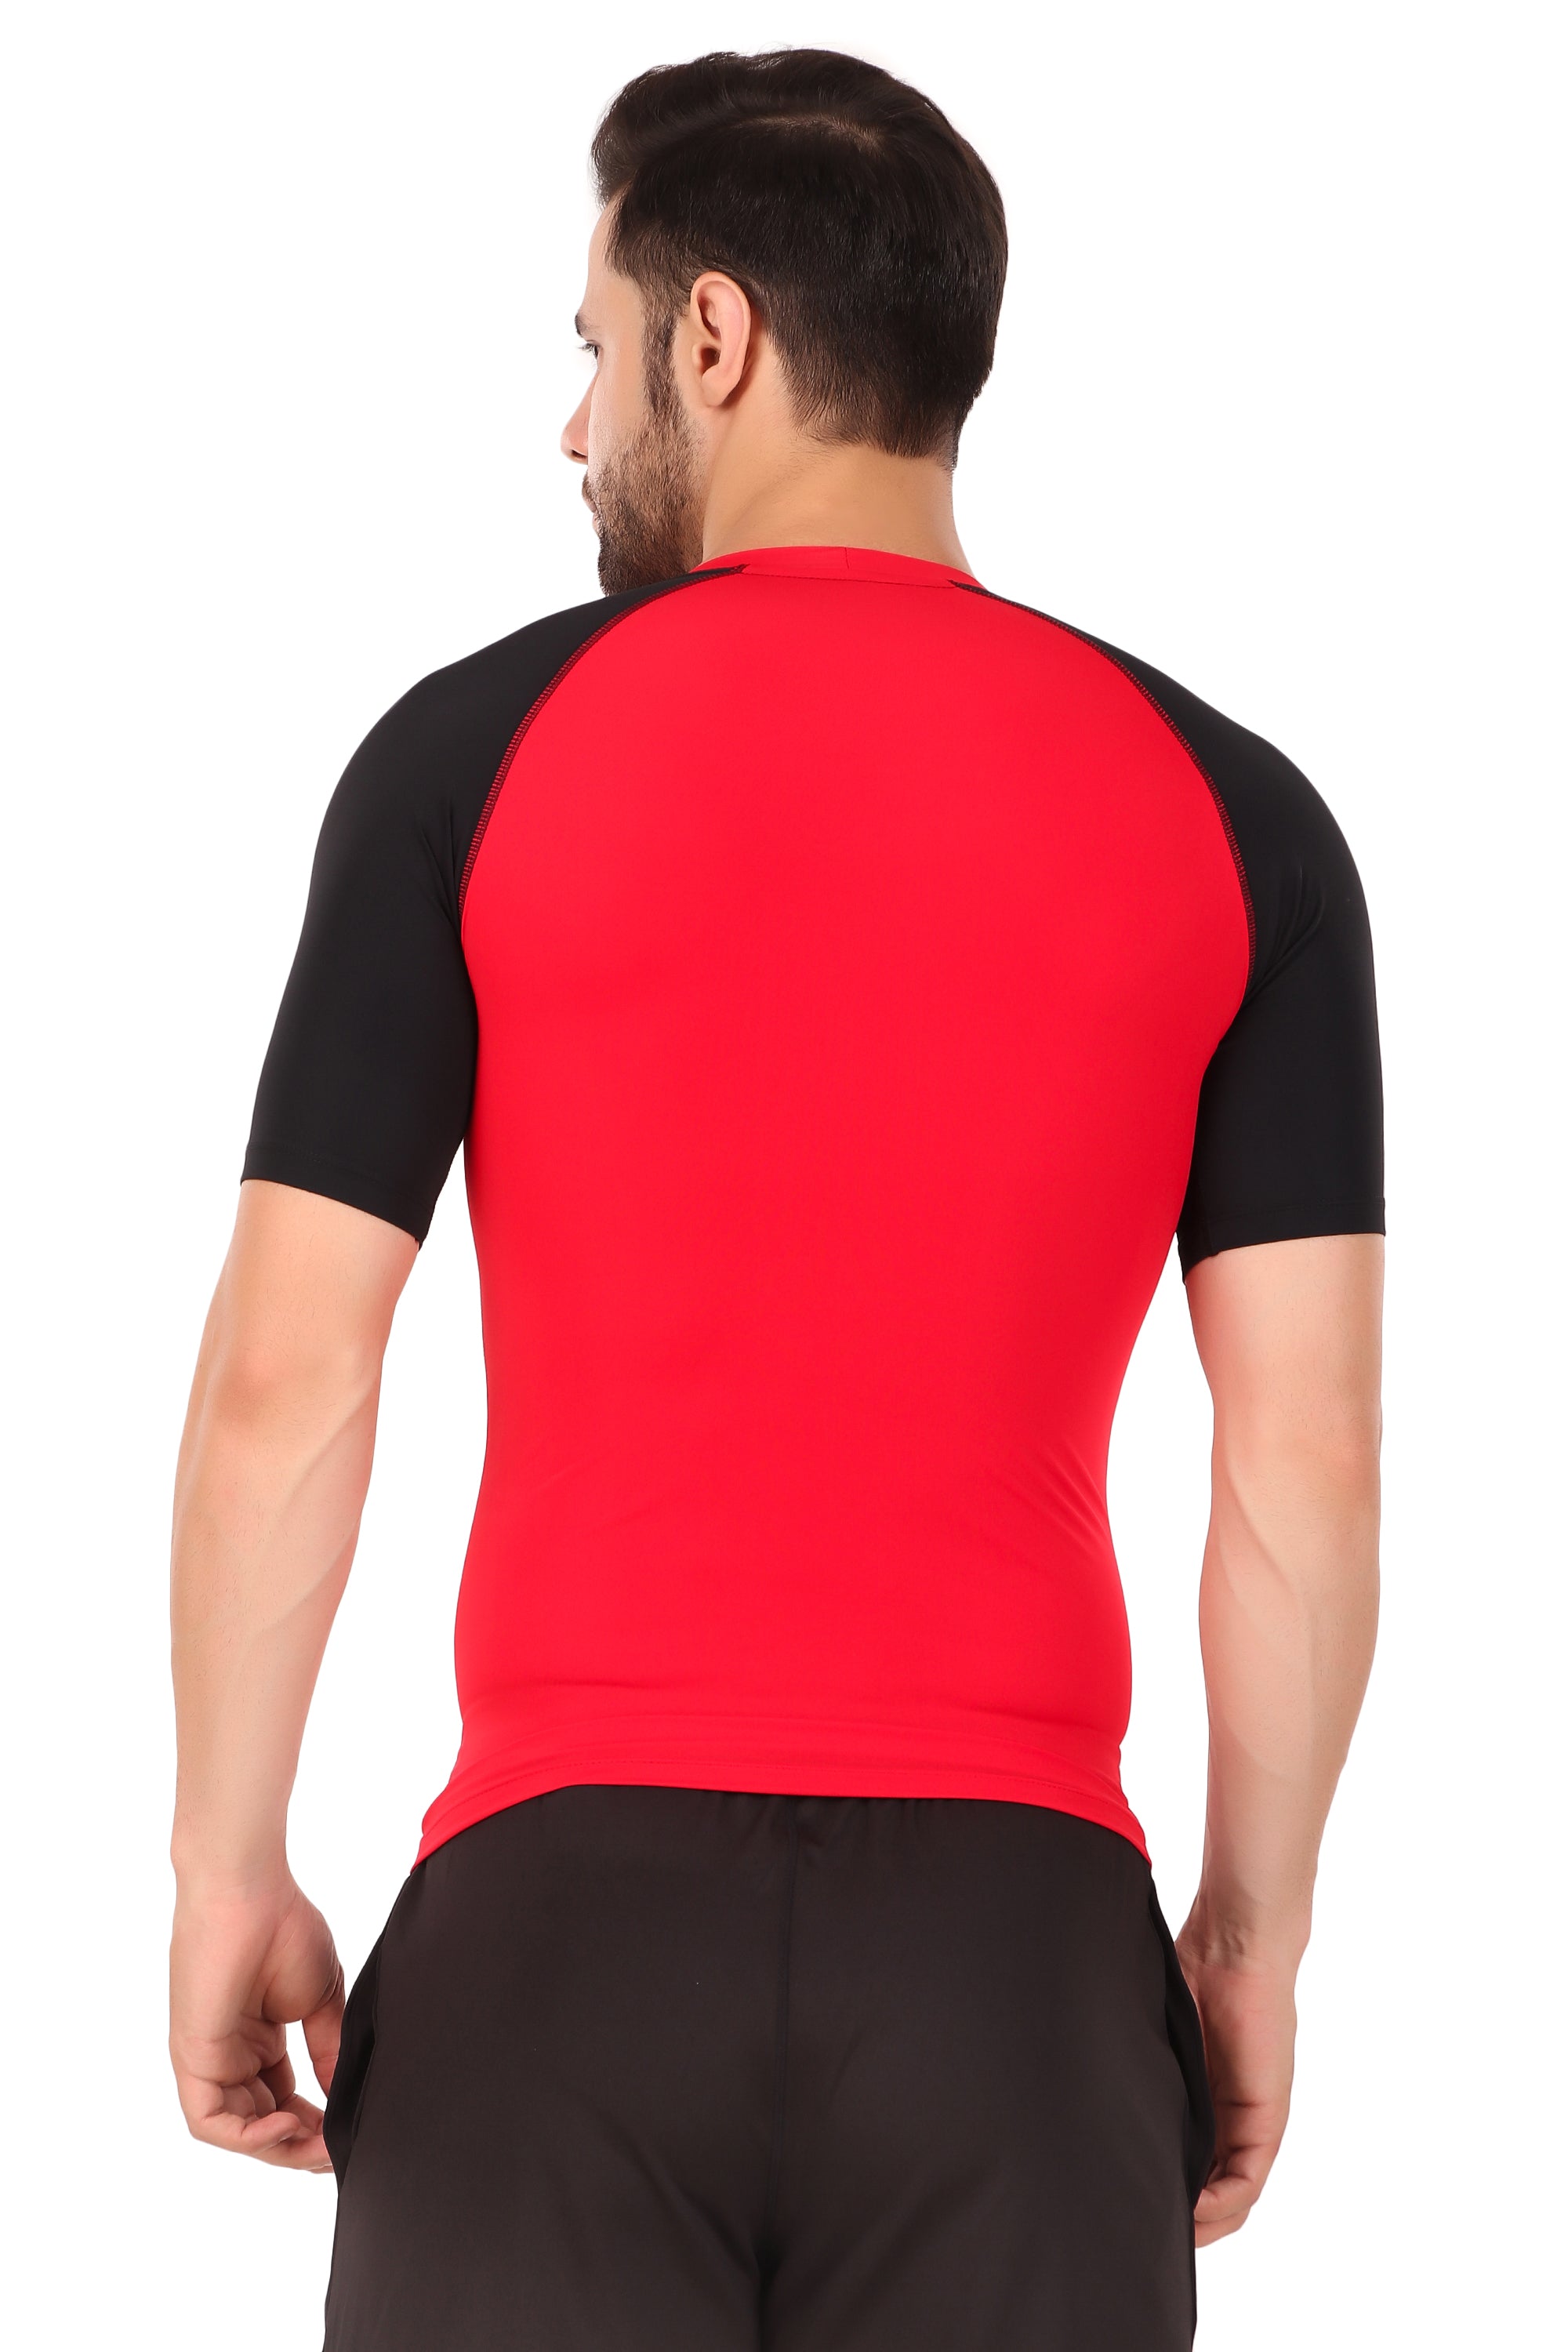 Nylon Compression Tshirt Half Sleeve Tights For Men (Red/Black)